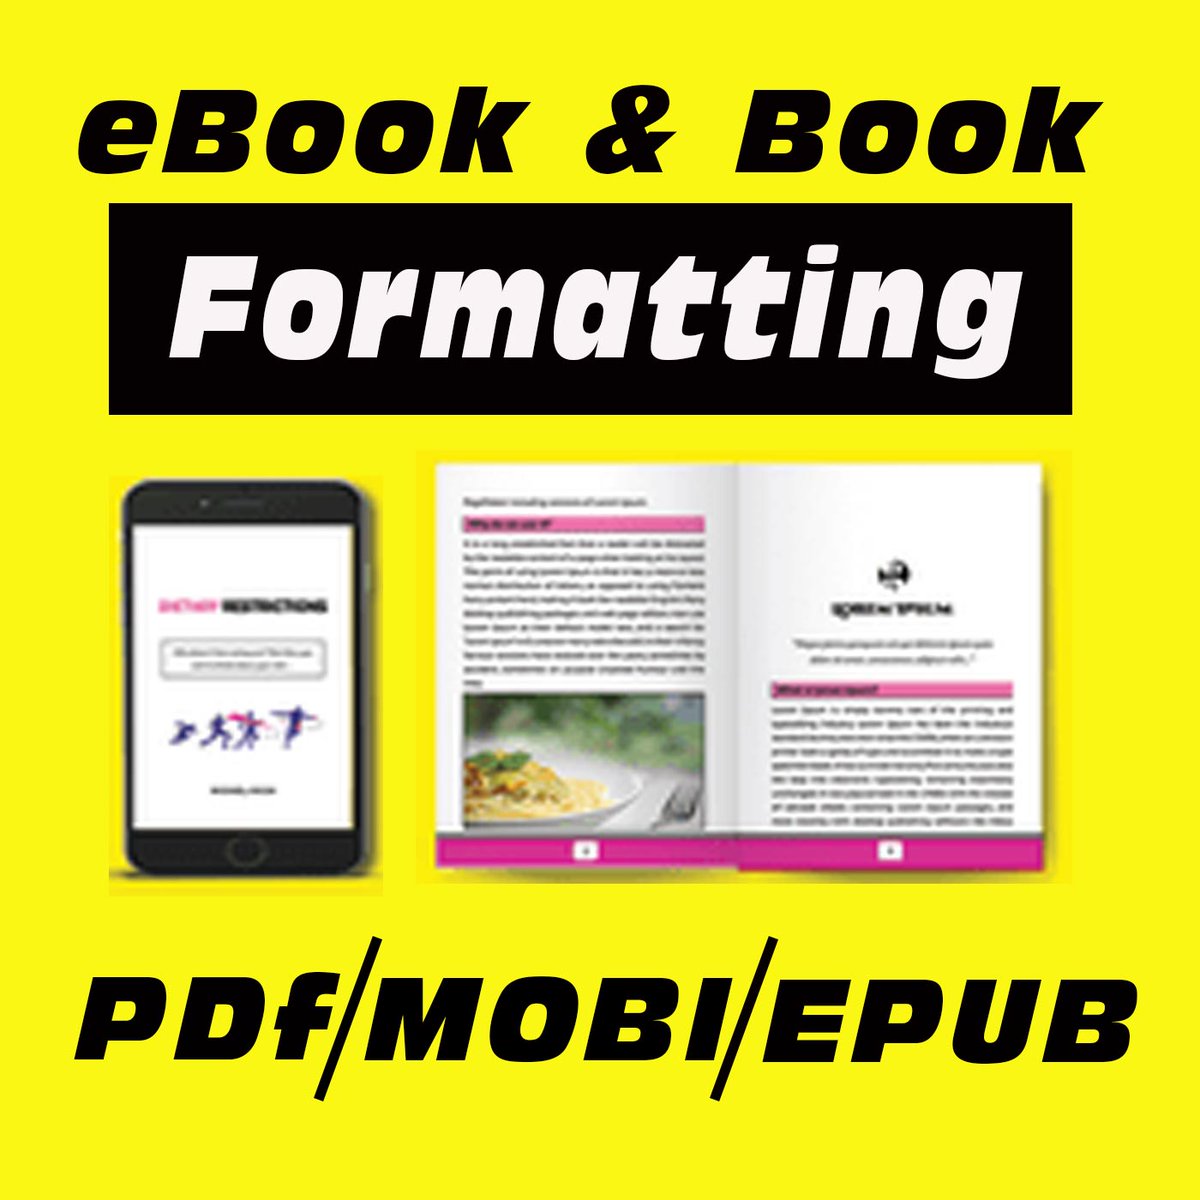 Ebook Formatting & Kindle Formatting Services
#paperbackformatting, #kindleformatting,  #ebookformatting,